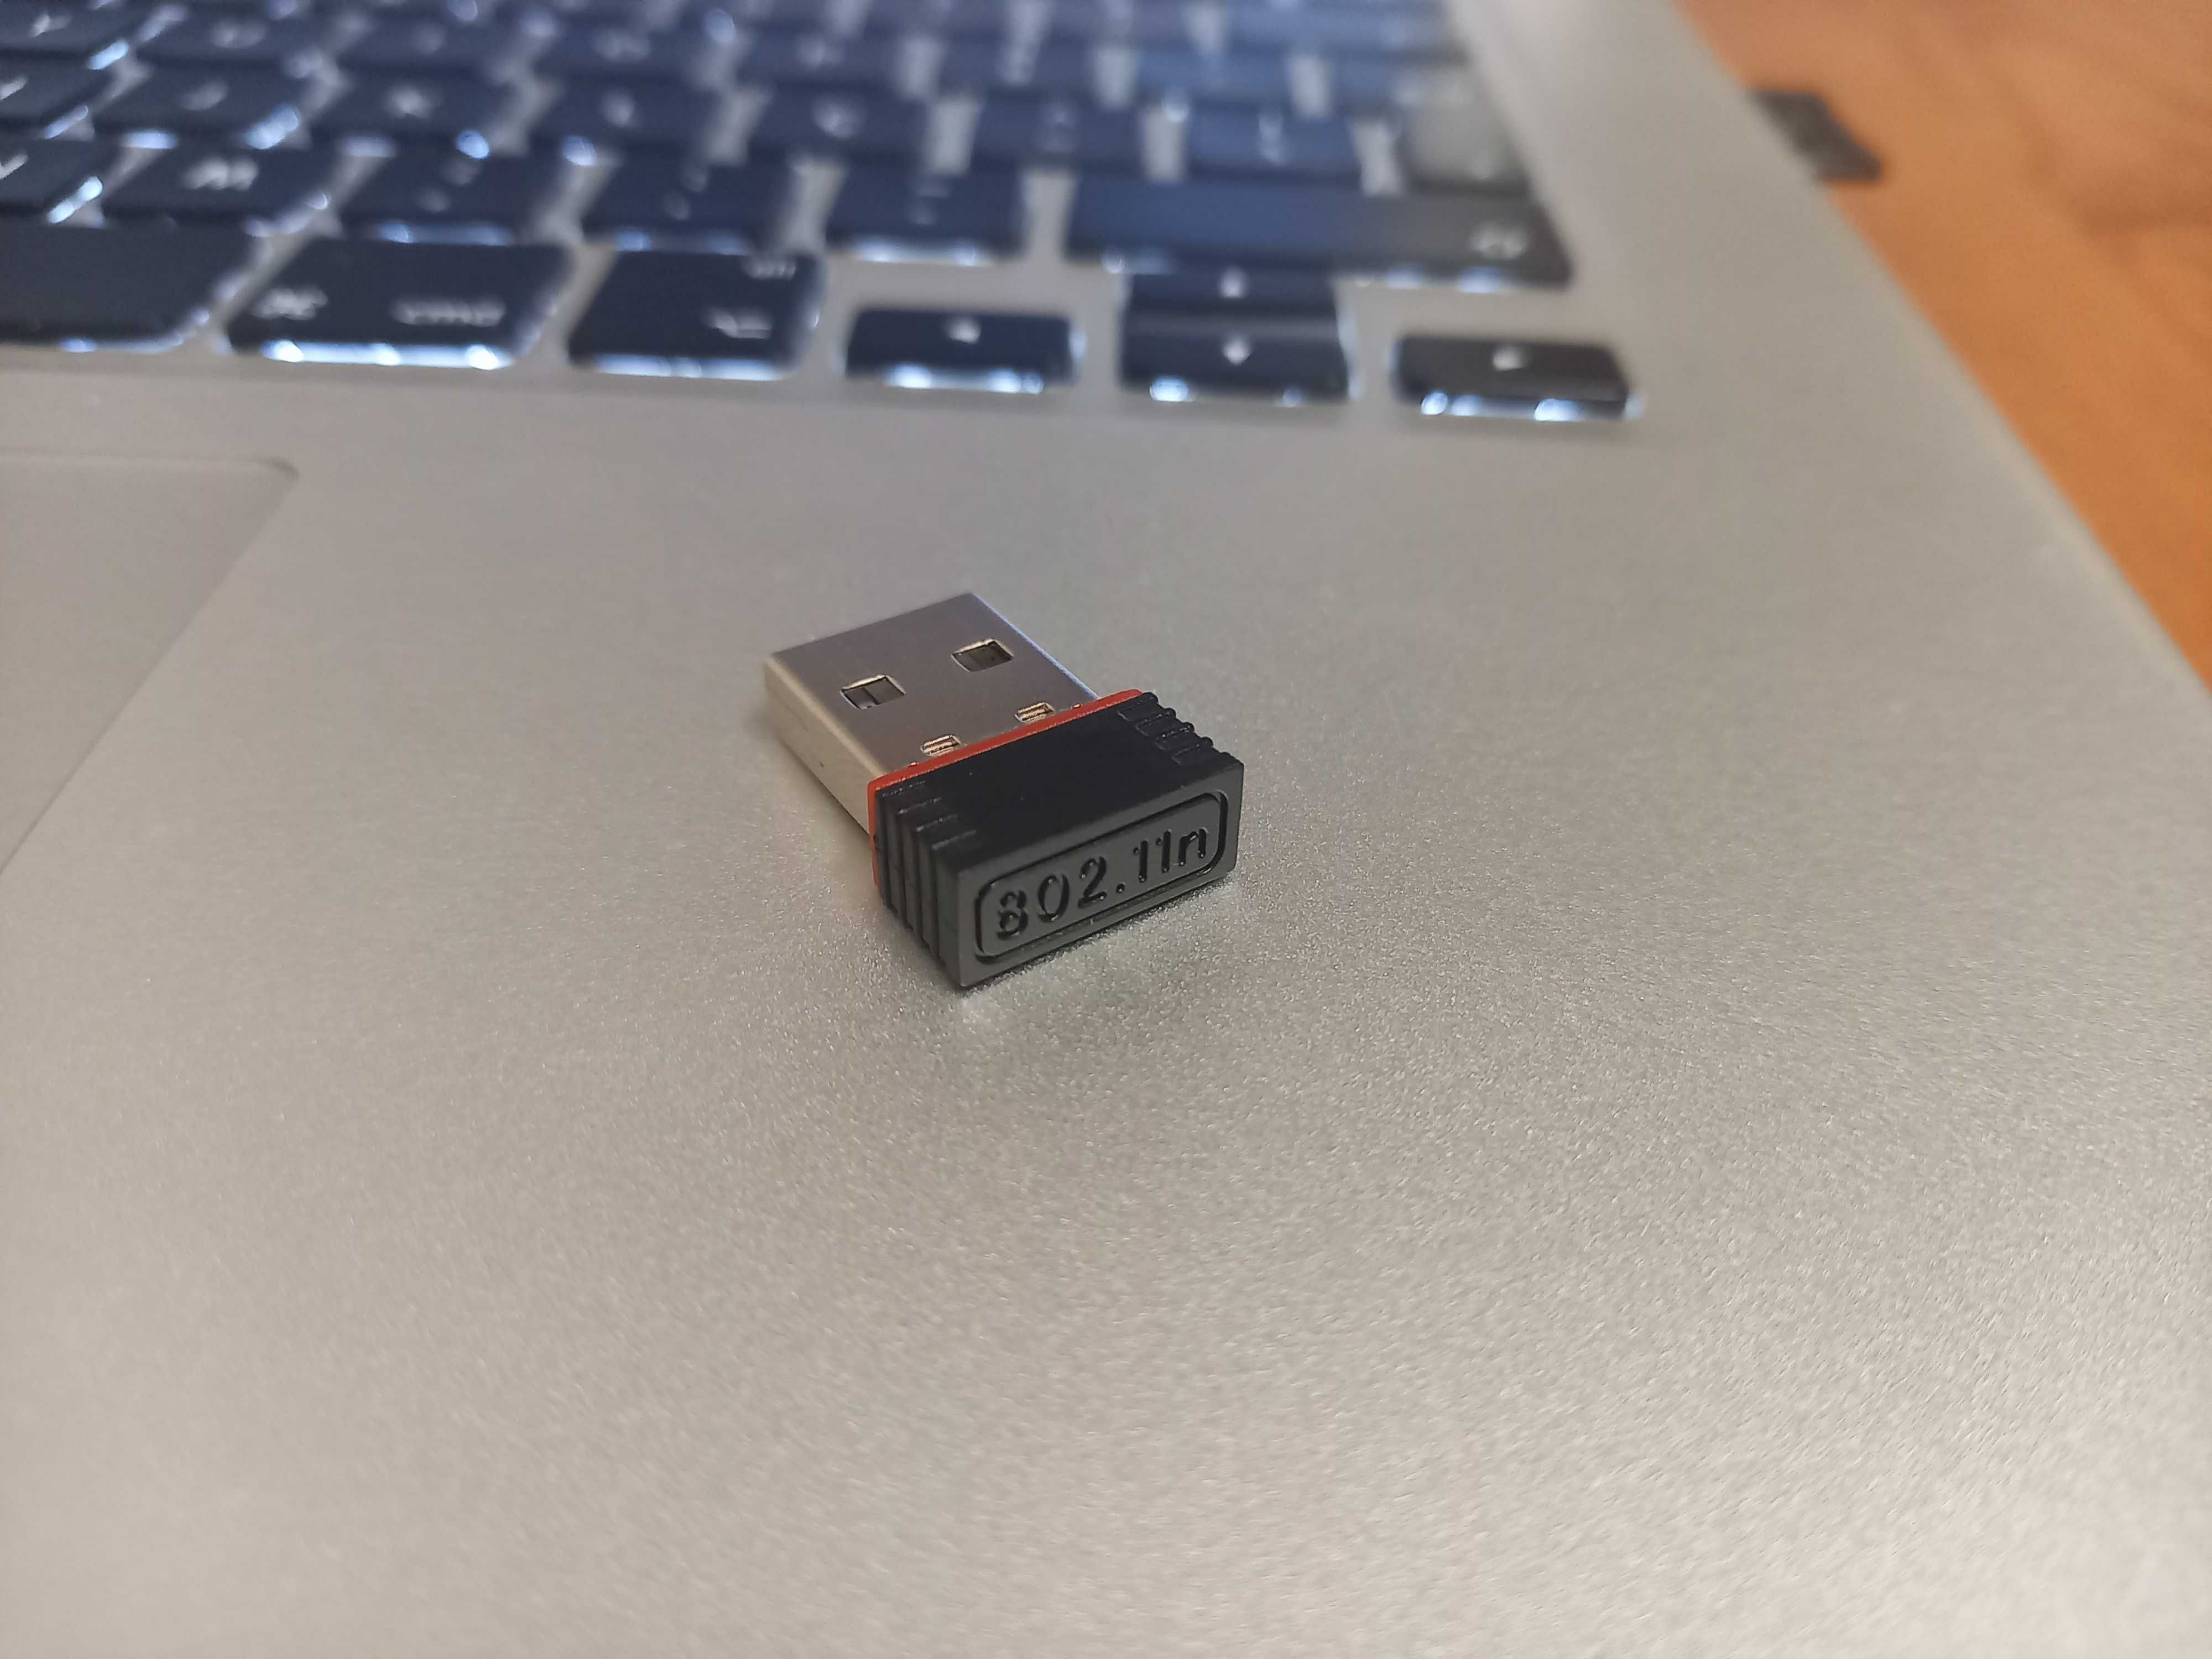 Pen USB WiFi WLAN 802.11n